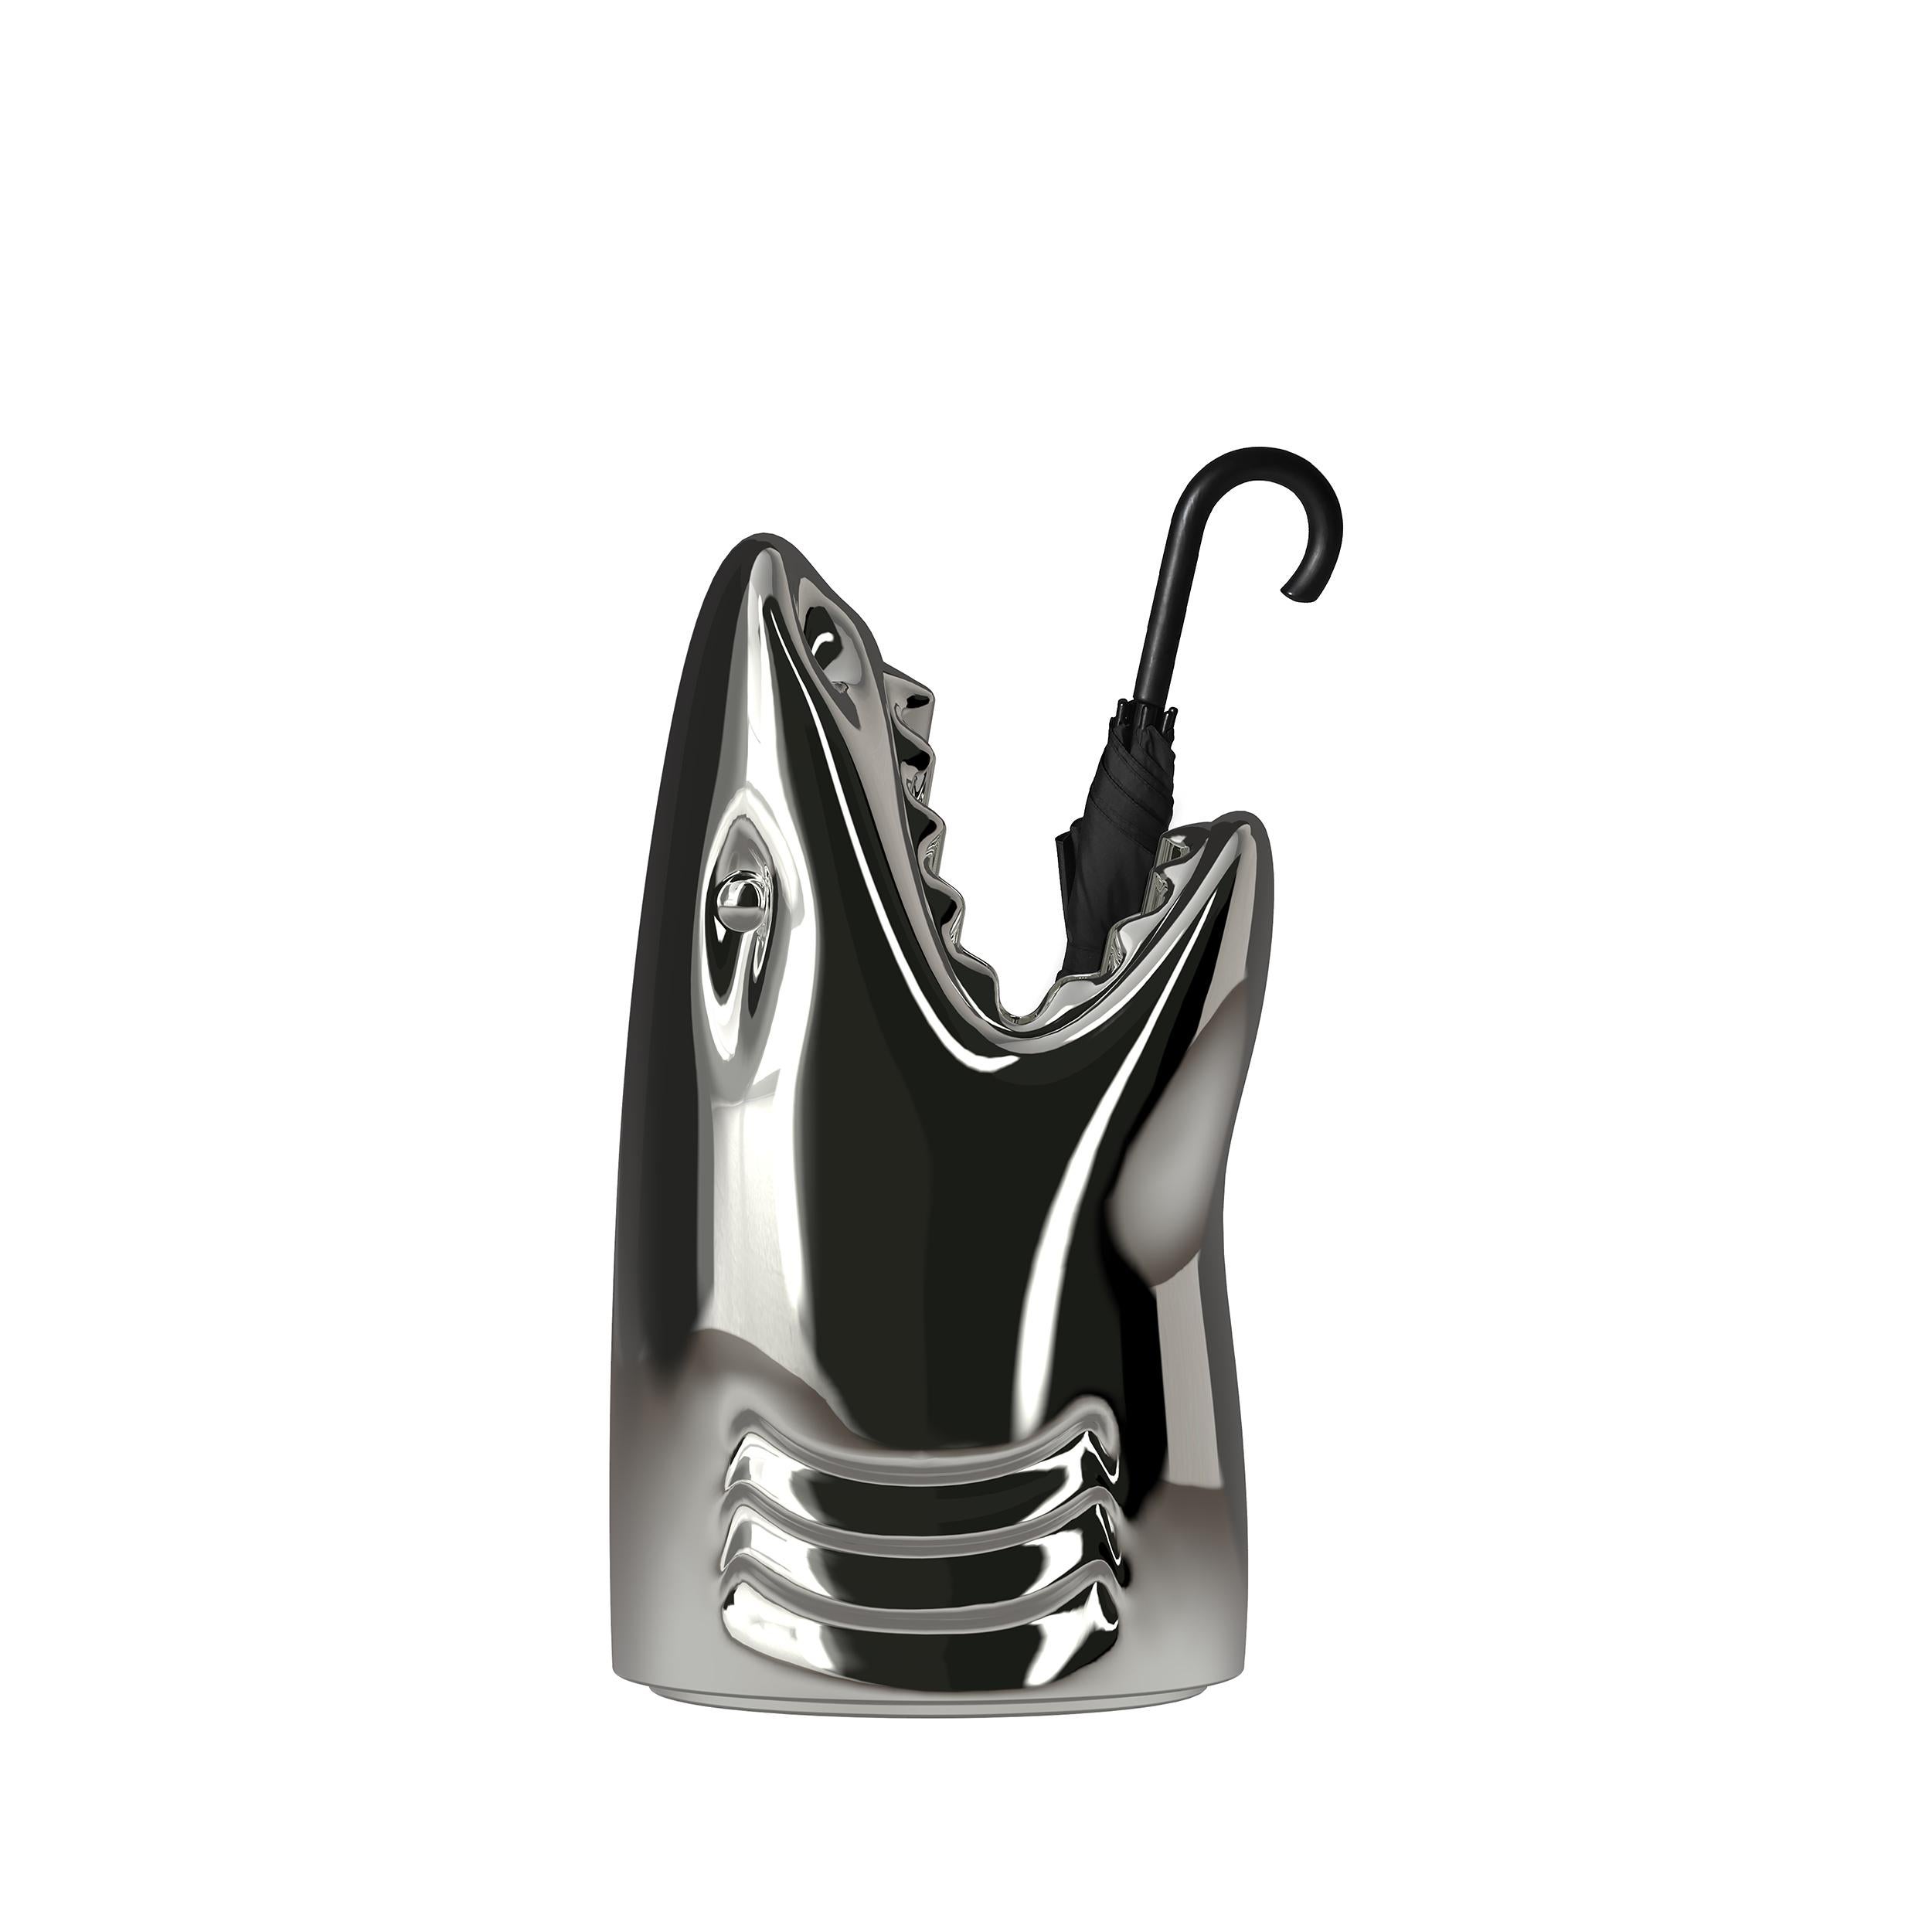 Im Angebot: Moderner moderner Schirmständer oder Champagner-Kühler aus Titan Silber oder Gold (Silver) 4